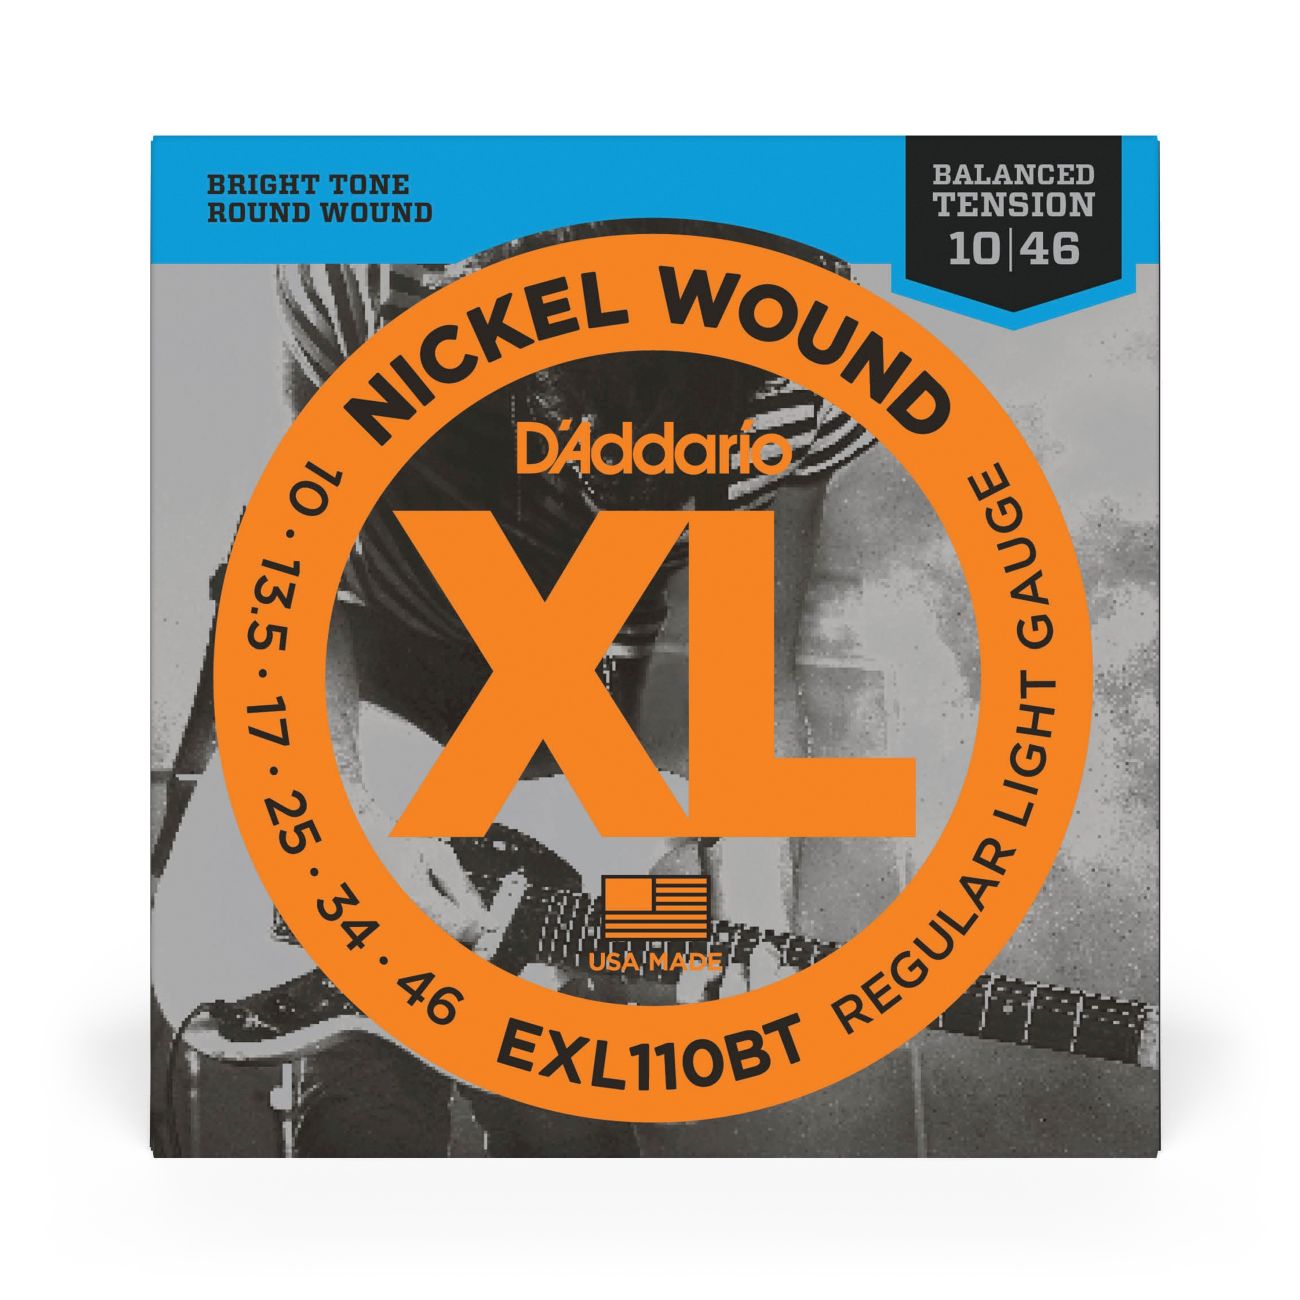 D'Addario EXL110BT | Nickel Wound Electric Guitar Strings 10-46 Regular Light Gauge | Balanced Tension